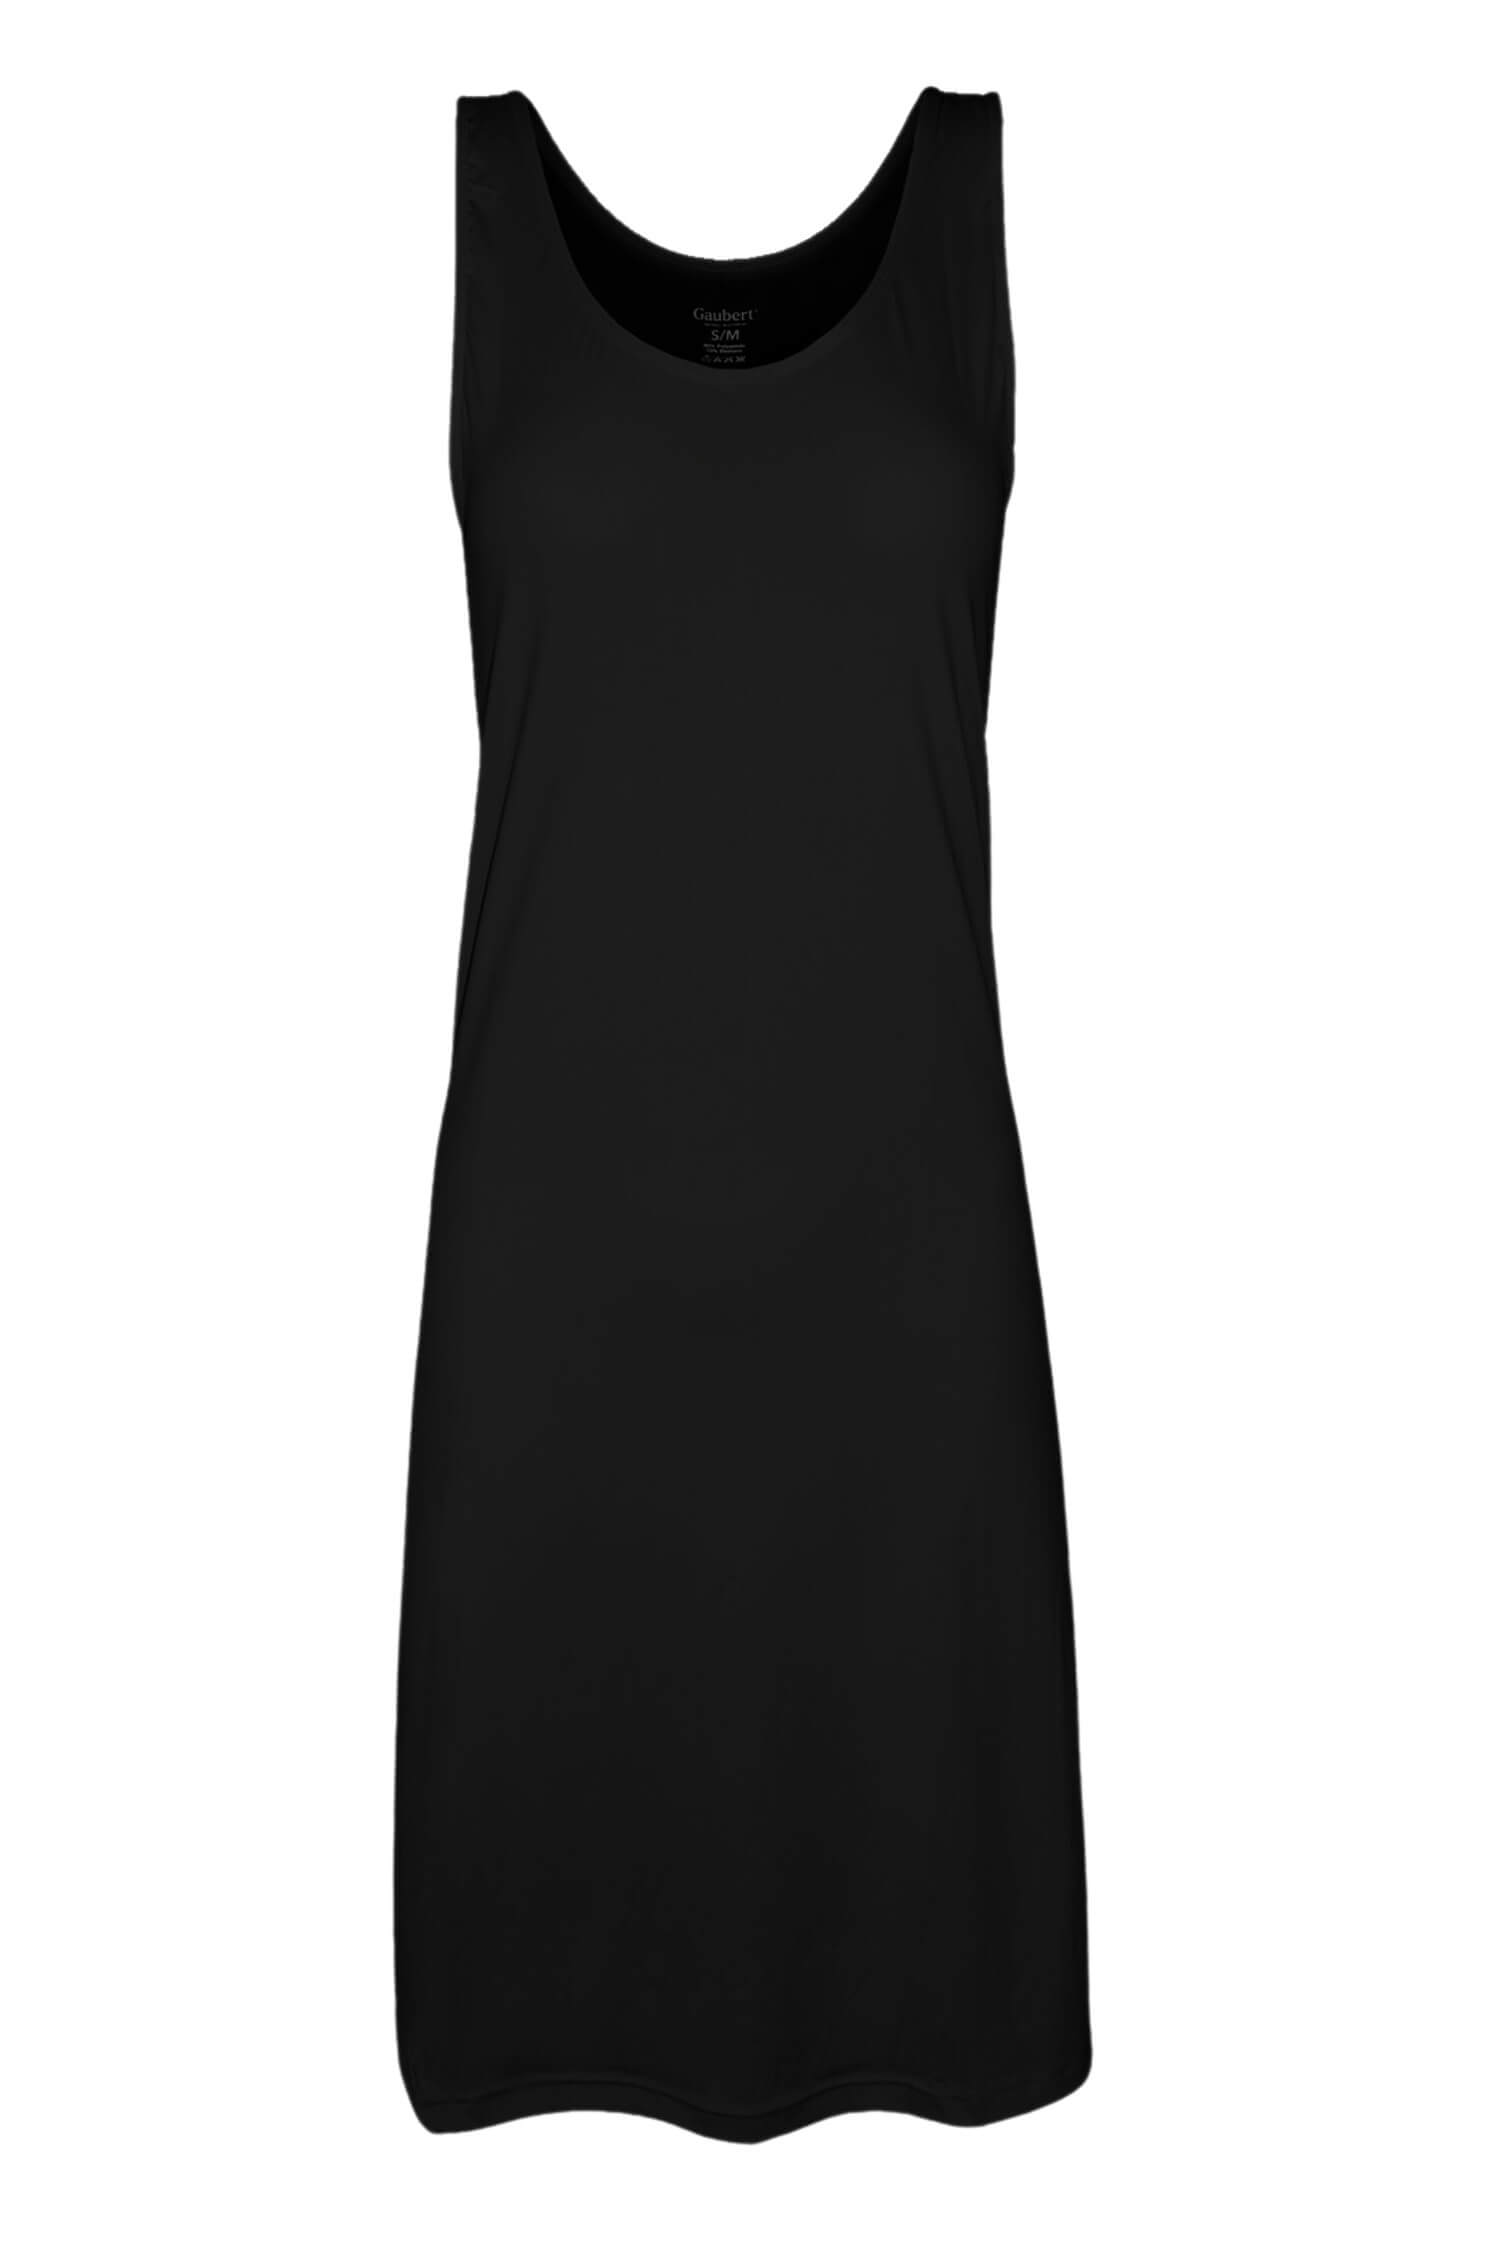 Klára dlouhá spodnička pod šaty GBTW-720 XXL černá